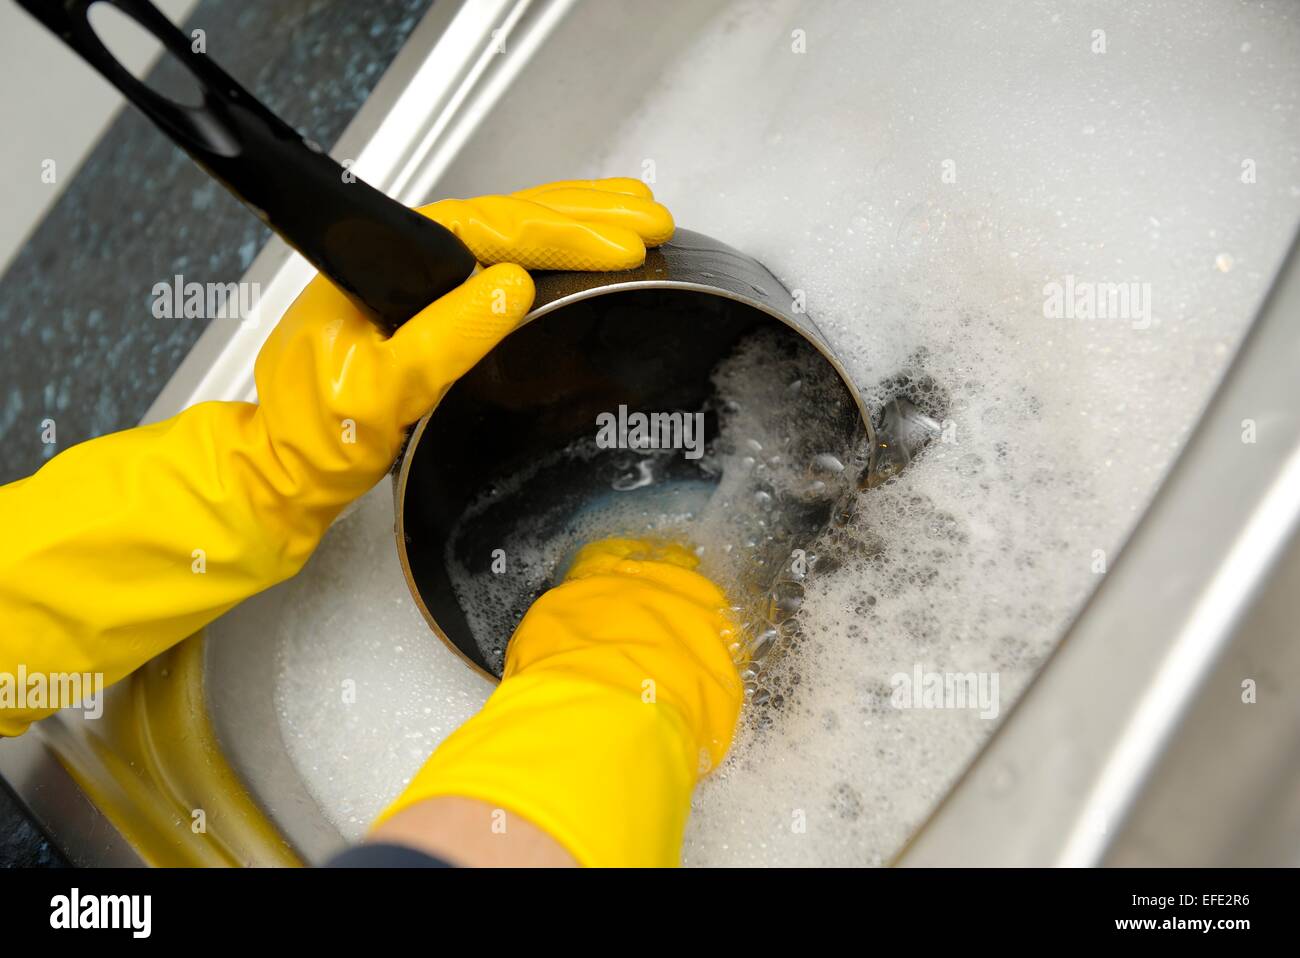 A woman washing pots wearing yellow rubber gloves Stock Photo